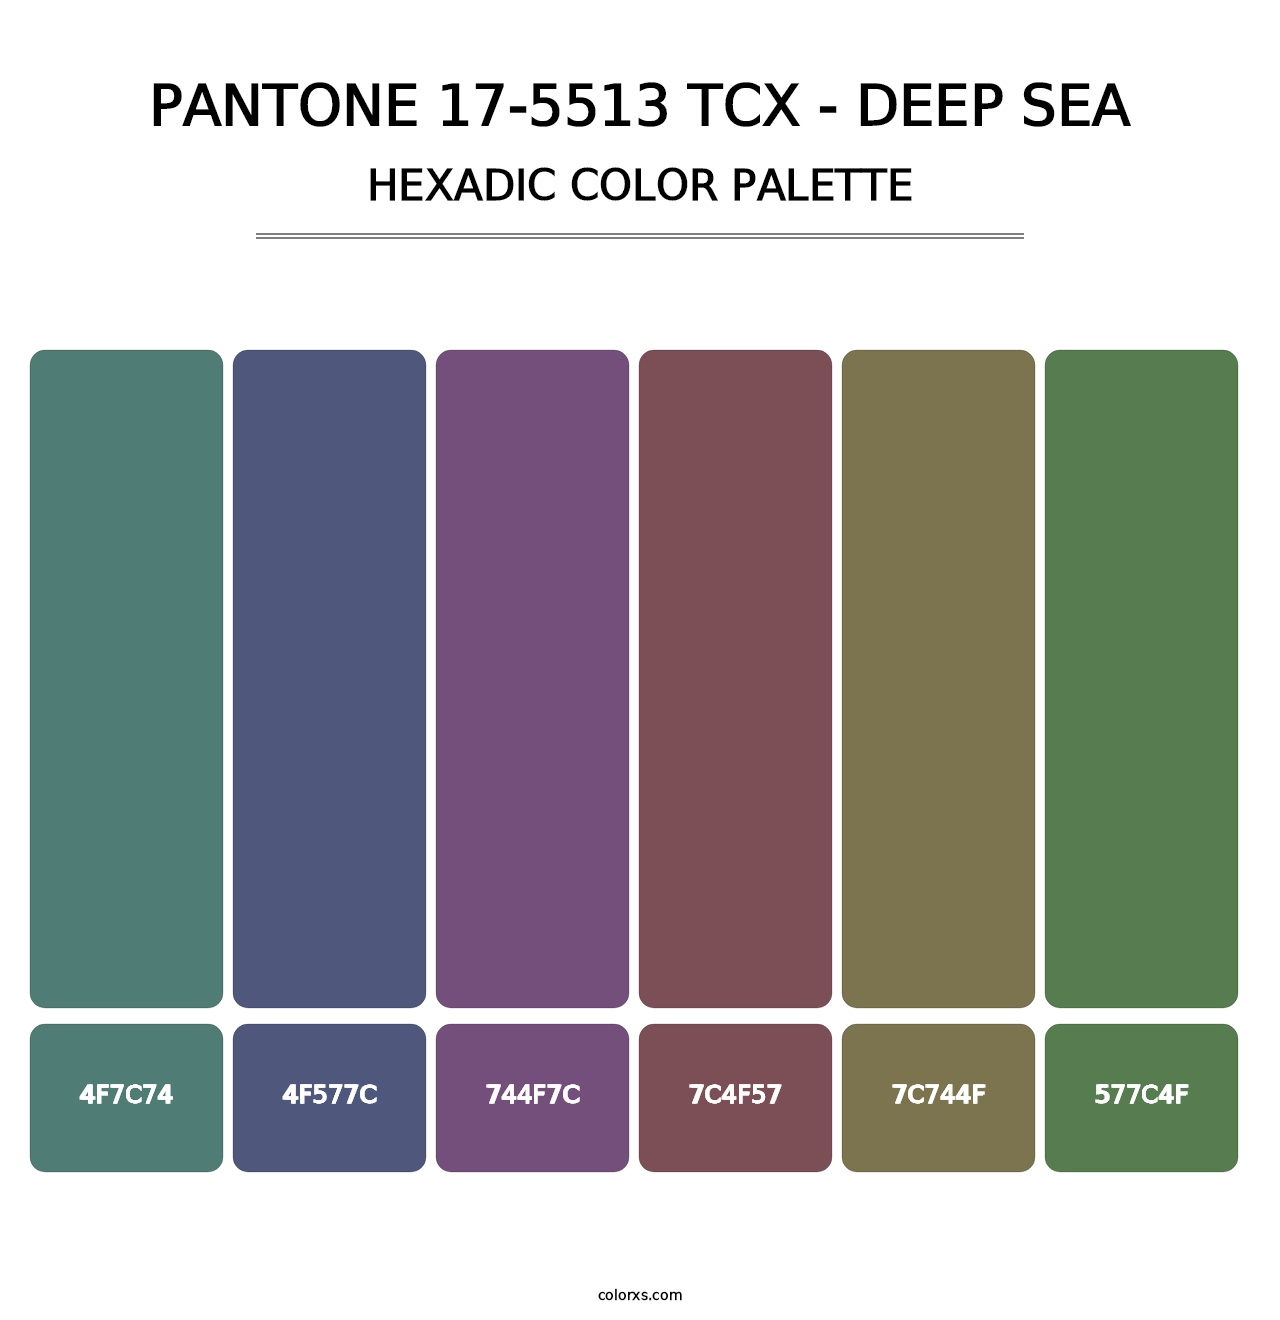 PANTONE 17-5513 TCX - Deep Sea - Hexadic Color Palette